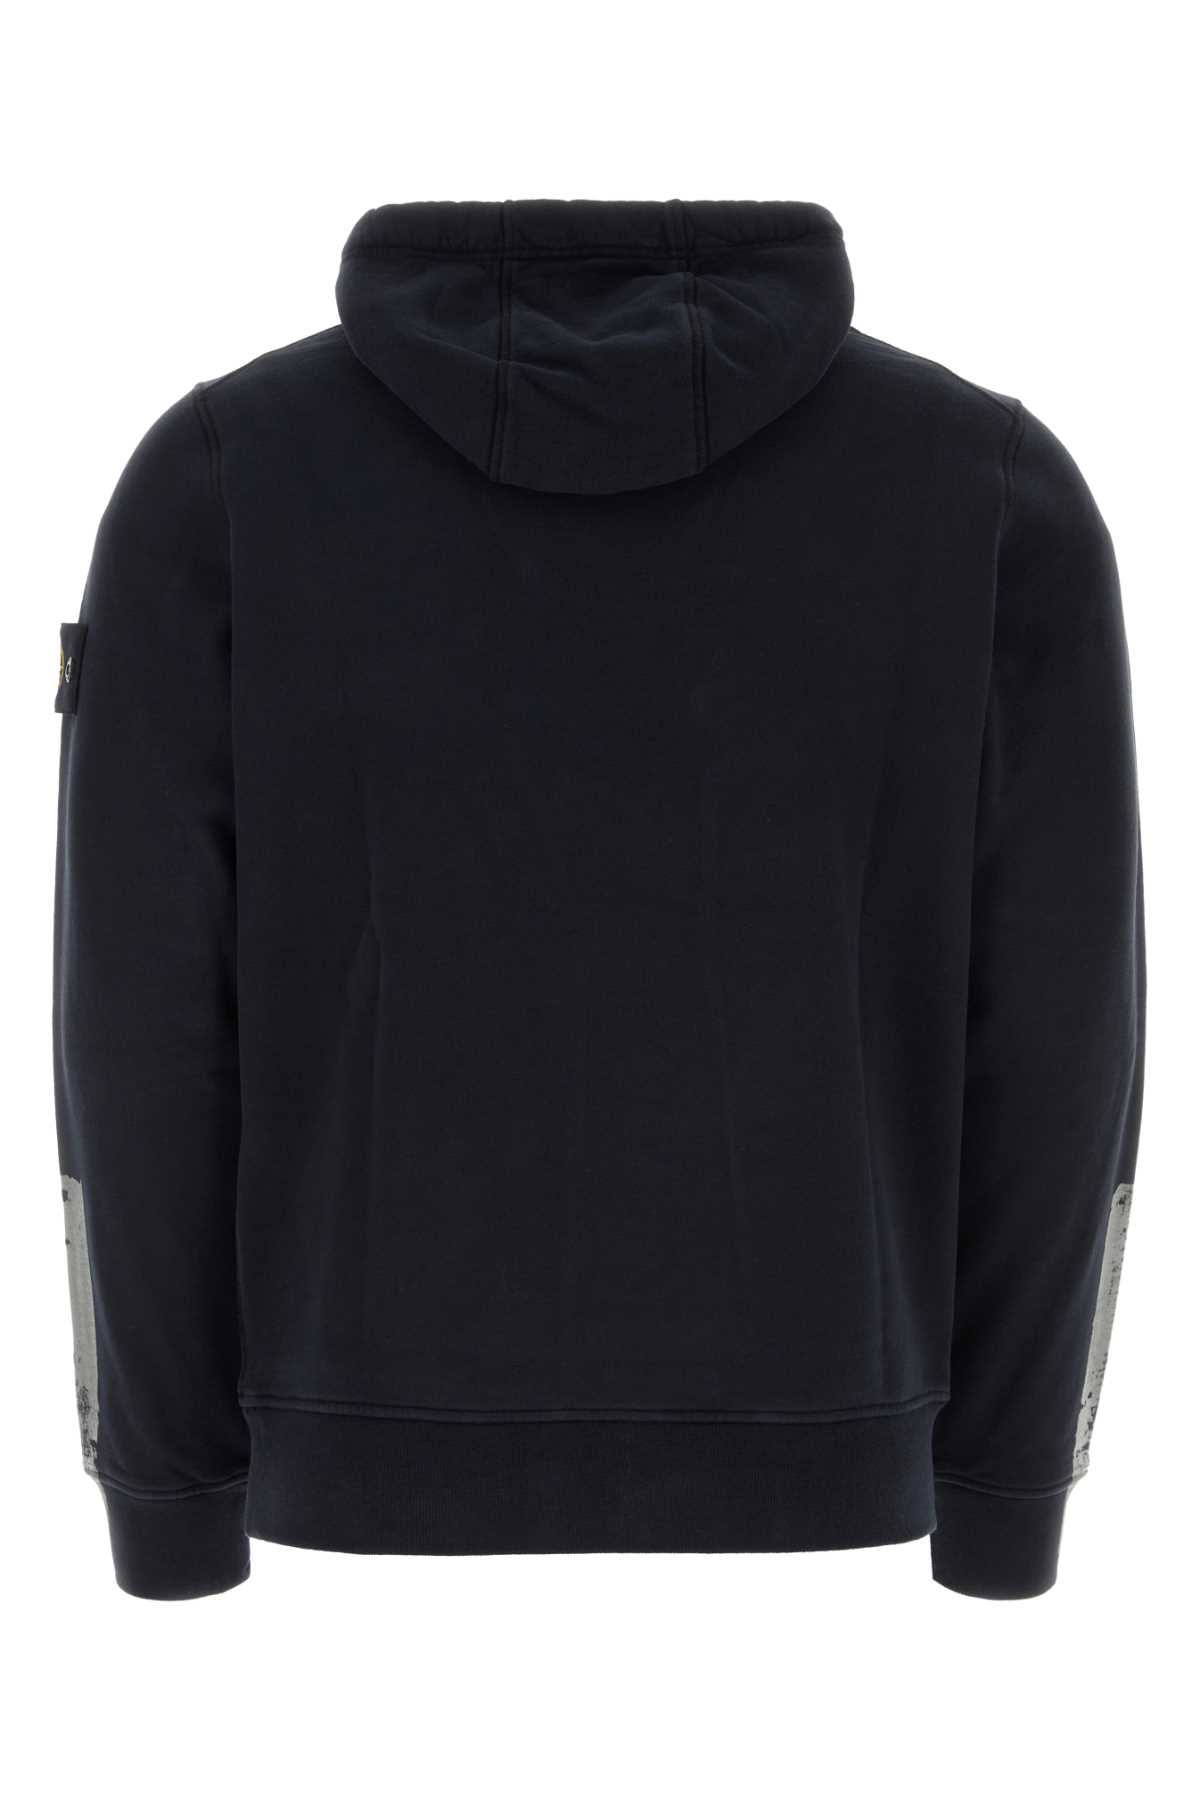 Stone Island Black Cotton Sweatshirt In V0020